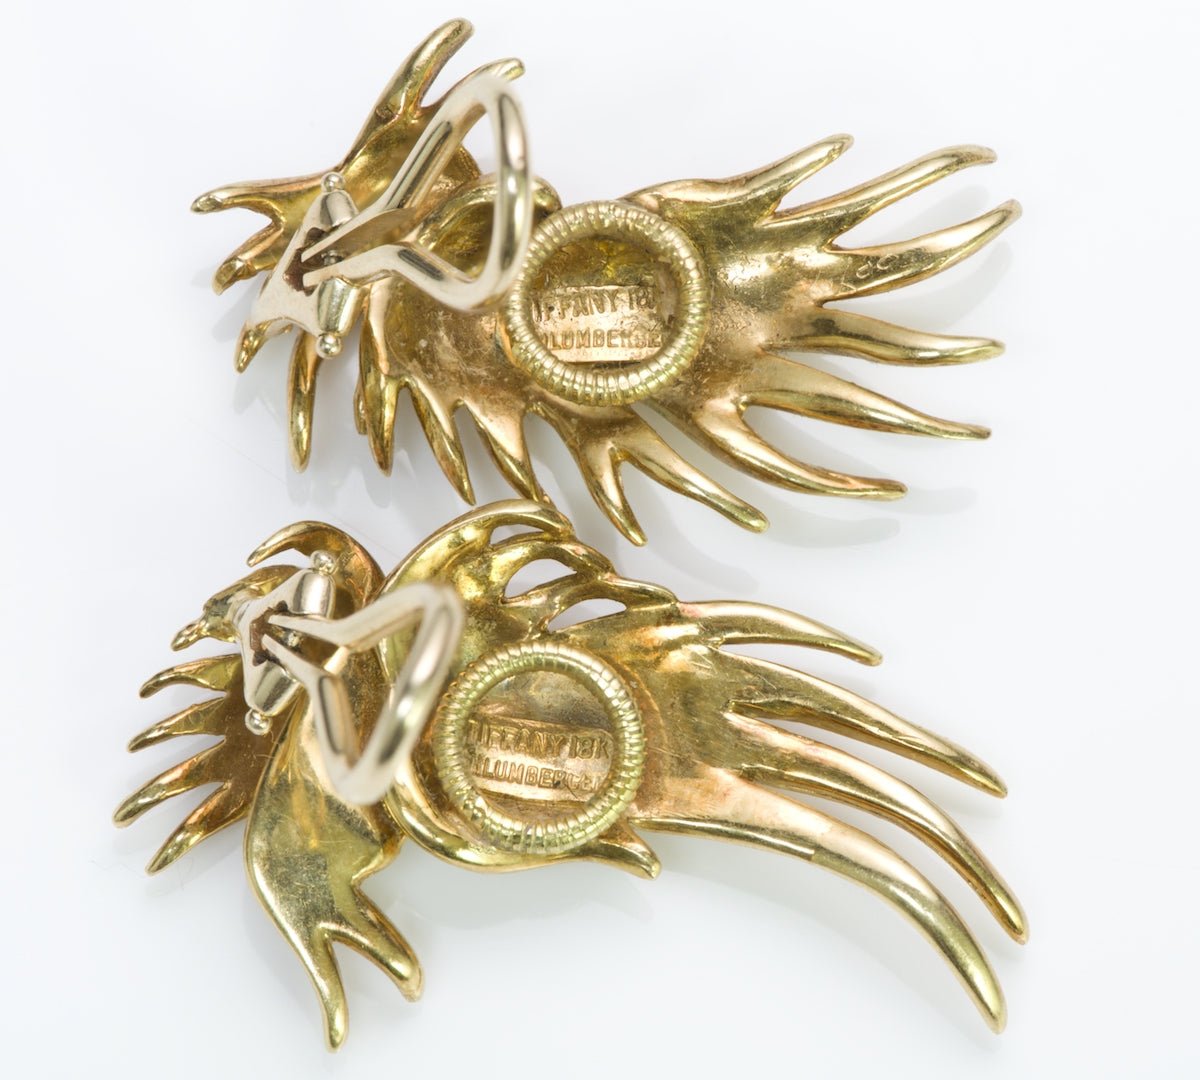 Tiffany & Co. Schlumberger Gold Earrings